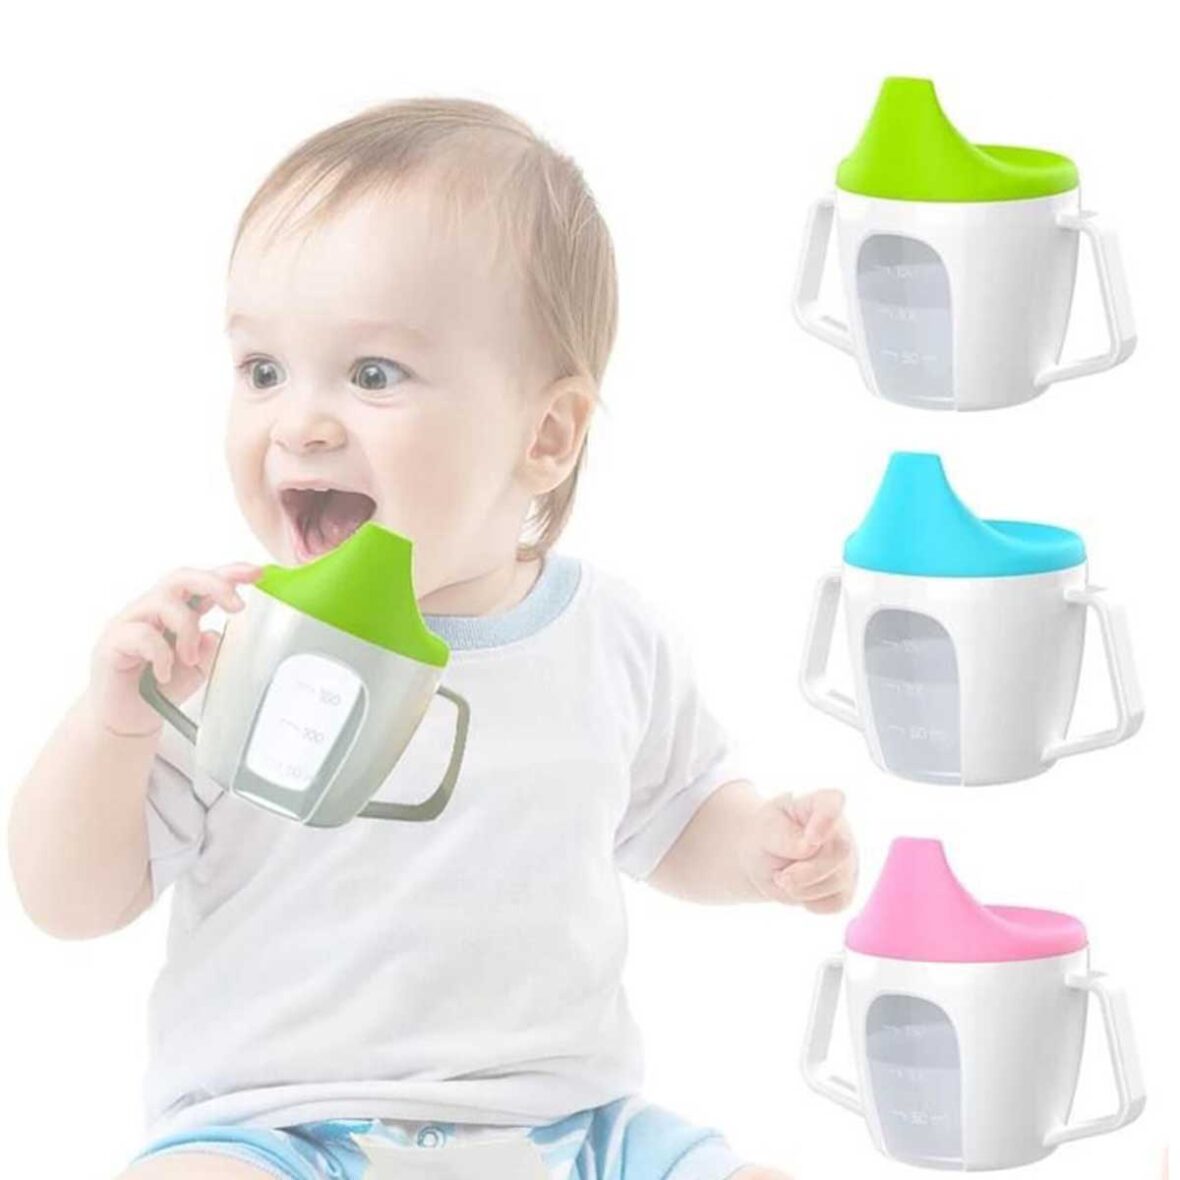 Baby Feeding Cup